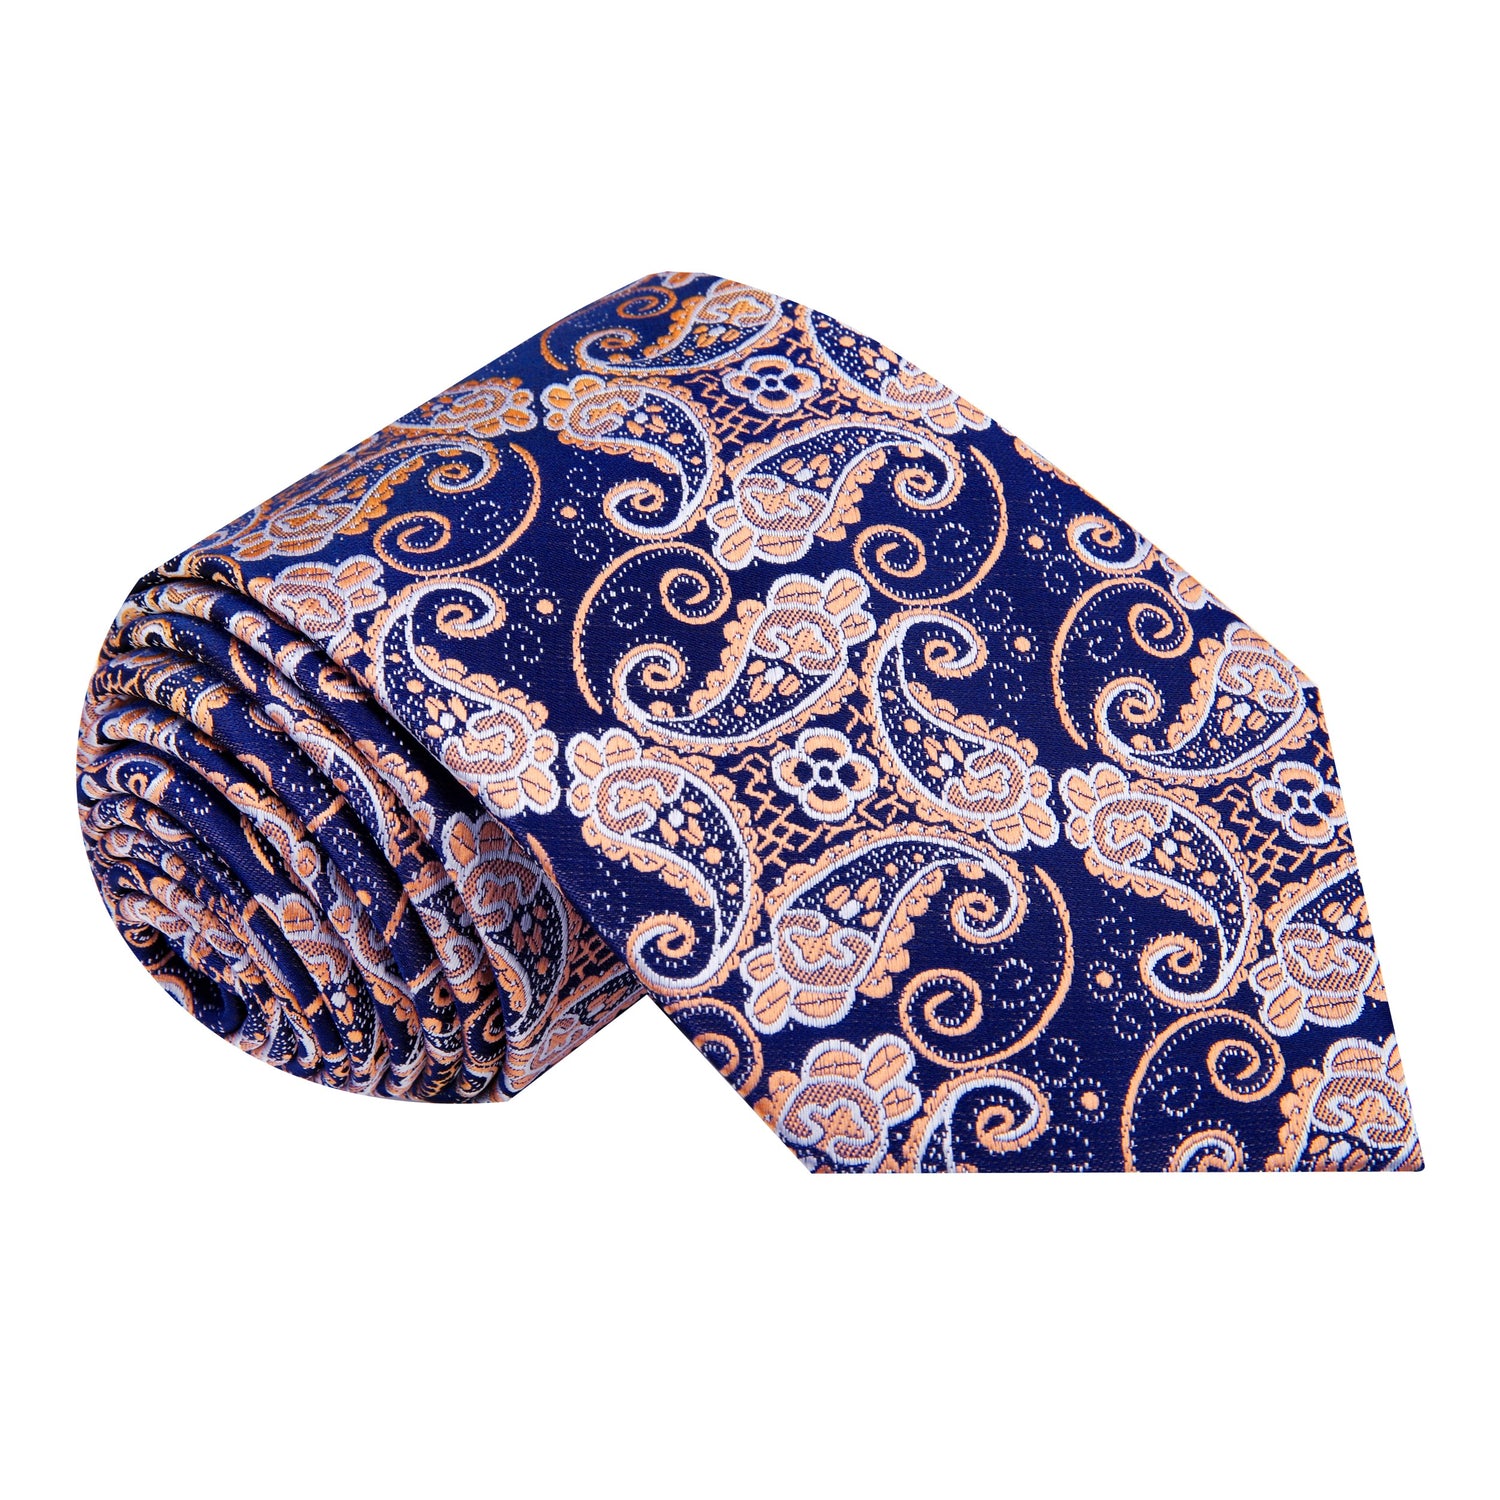 A Deep Blue, Tan Paisley Pattern Silk Necktie 